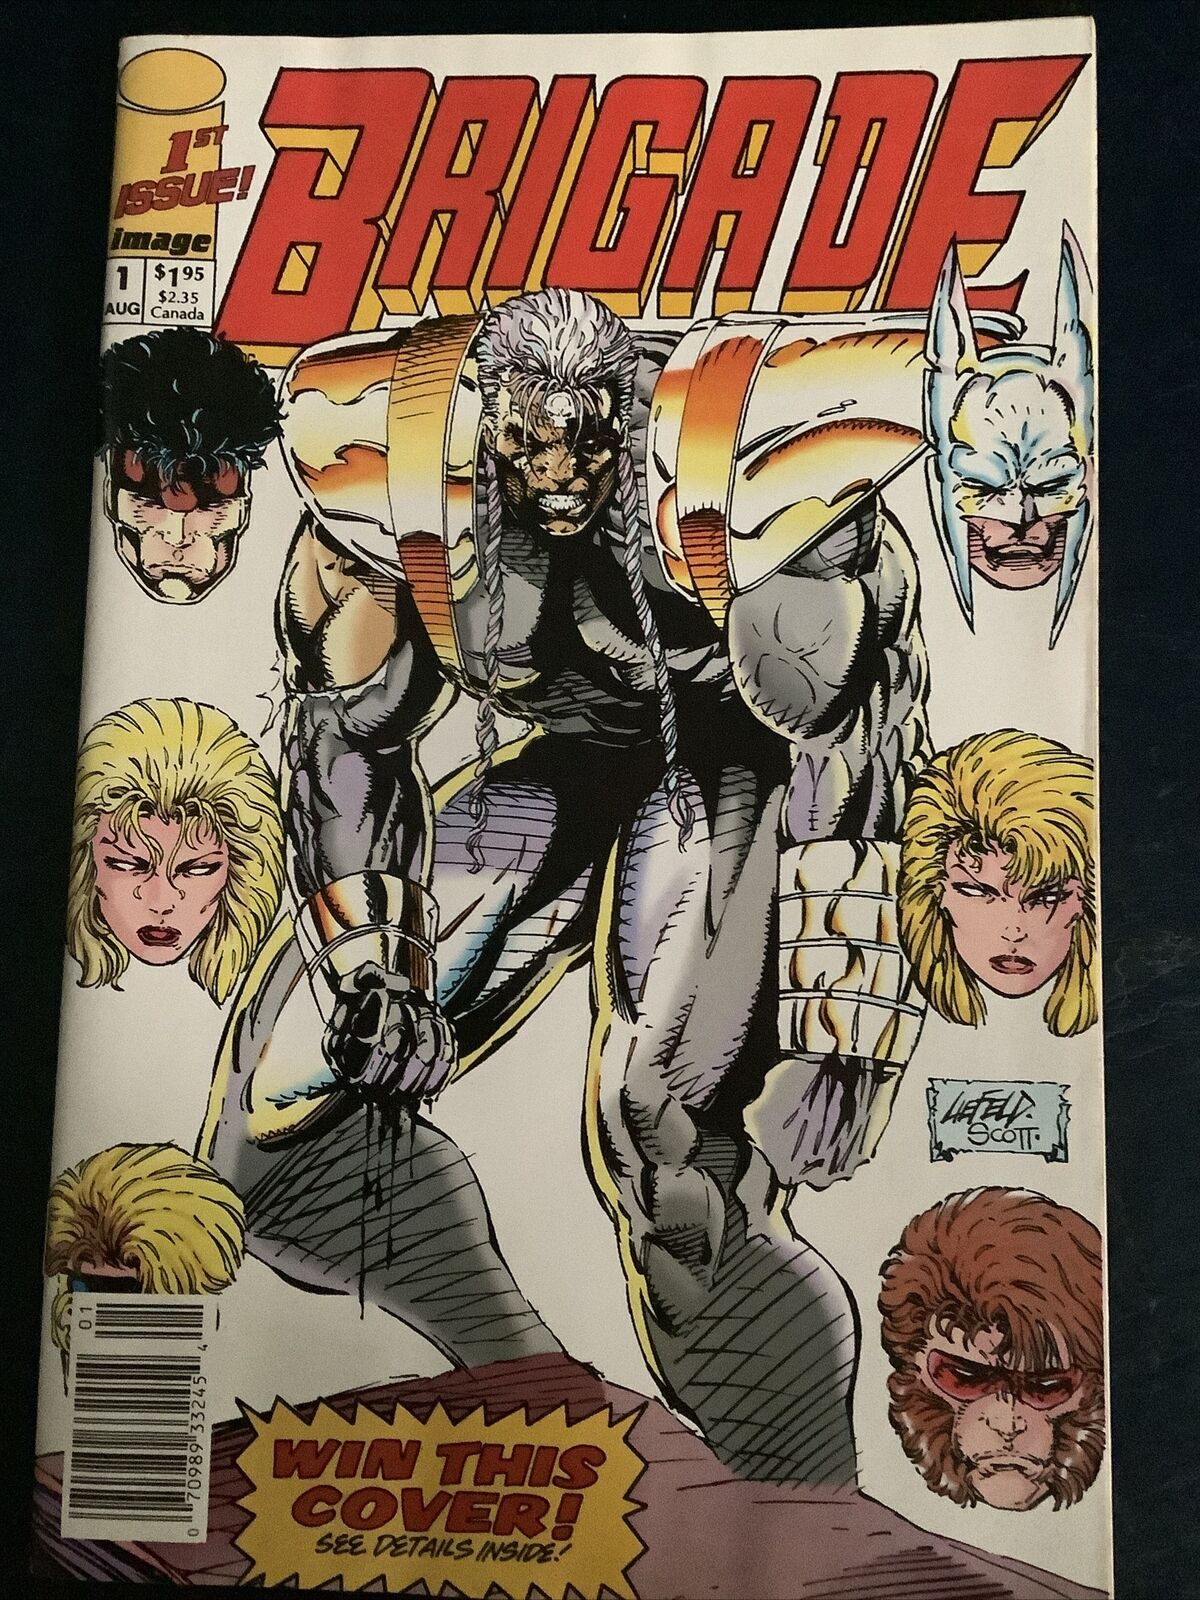 Brigade #1 Newsstand Cover (1992-1993) Image Comics. CO2